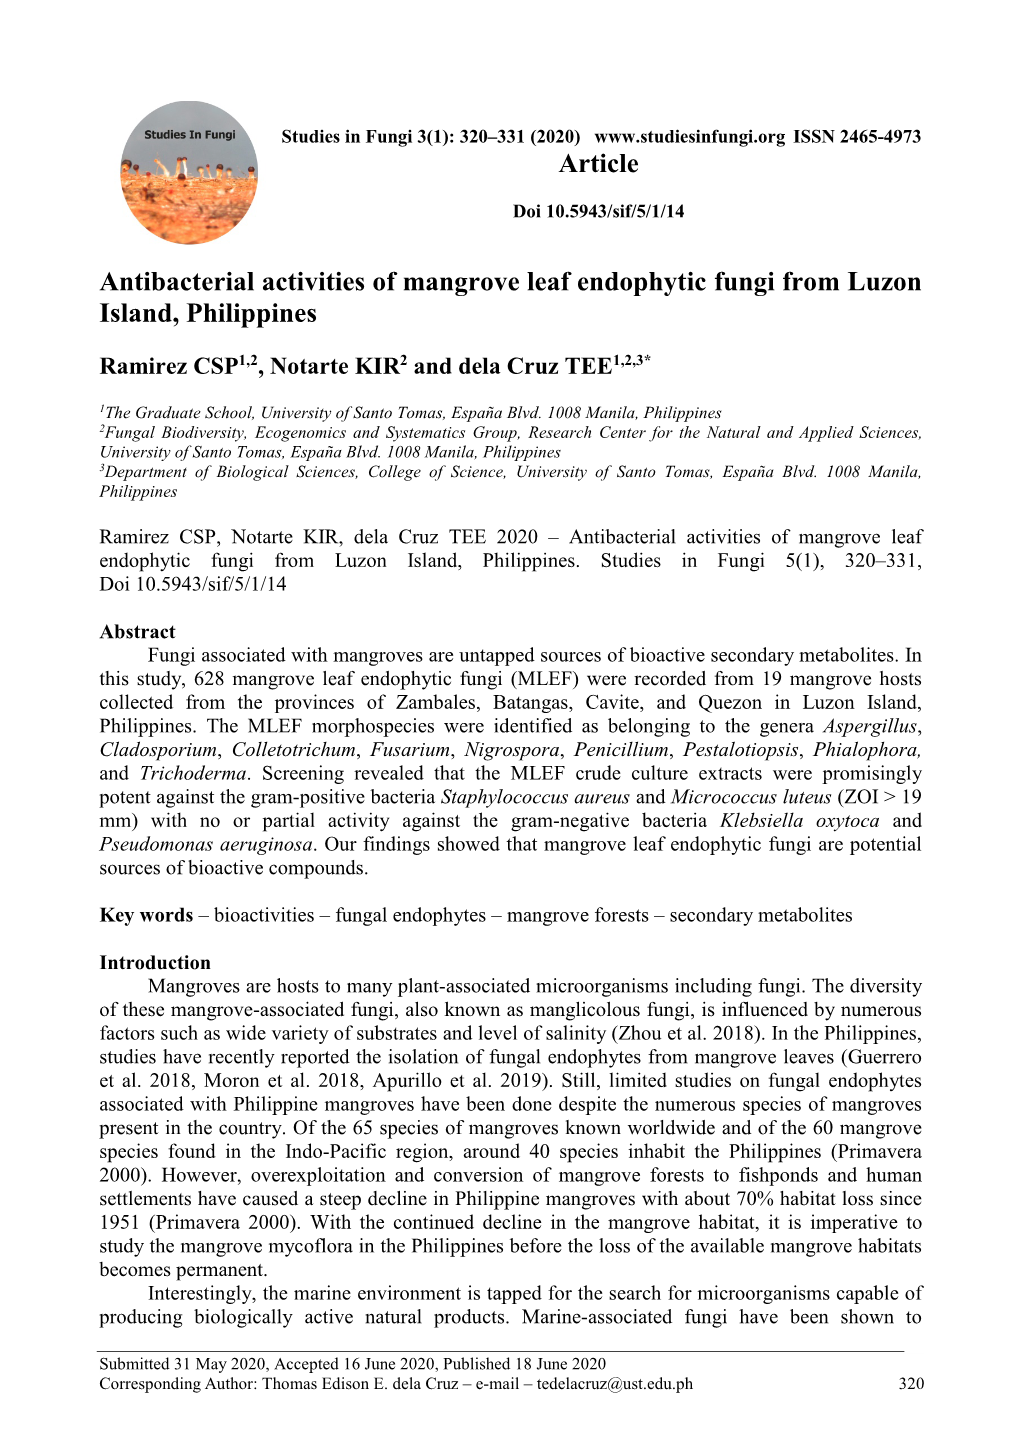 Antibacterial Activities of Mangrove Leaf Endophytic Fungi from Luzon Island, Philippines